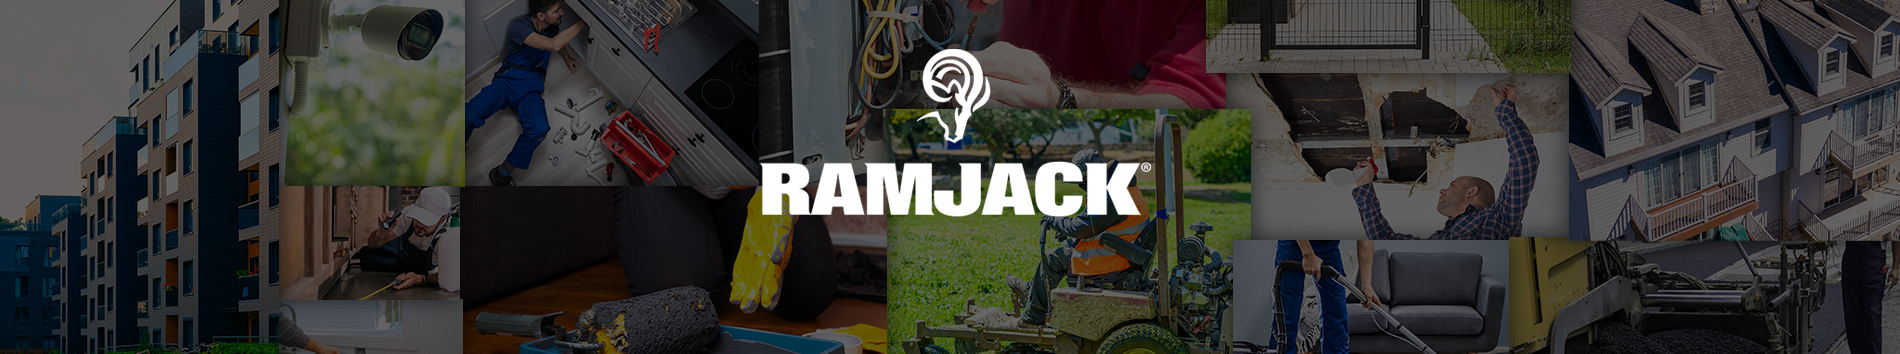 Ram Jack Foundation Repair Solutions